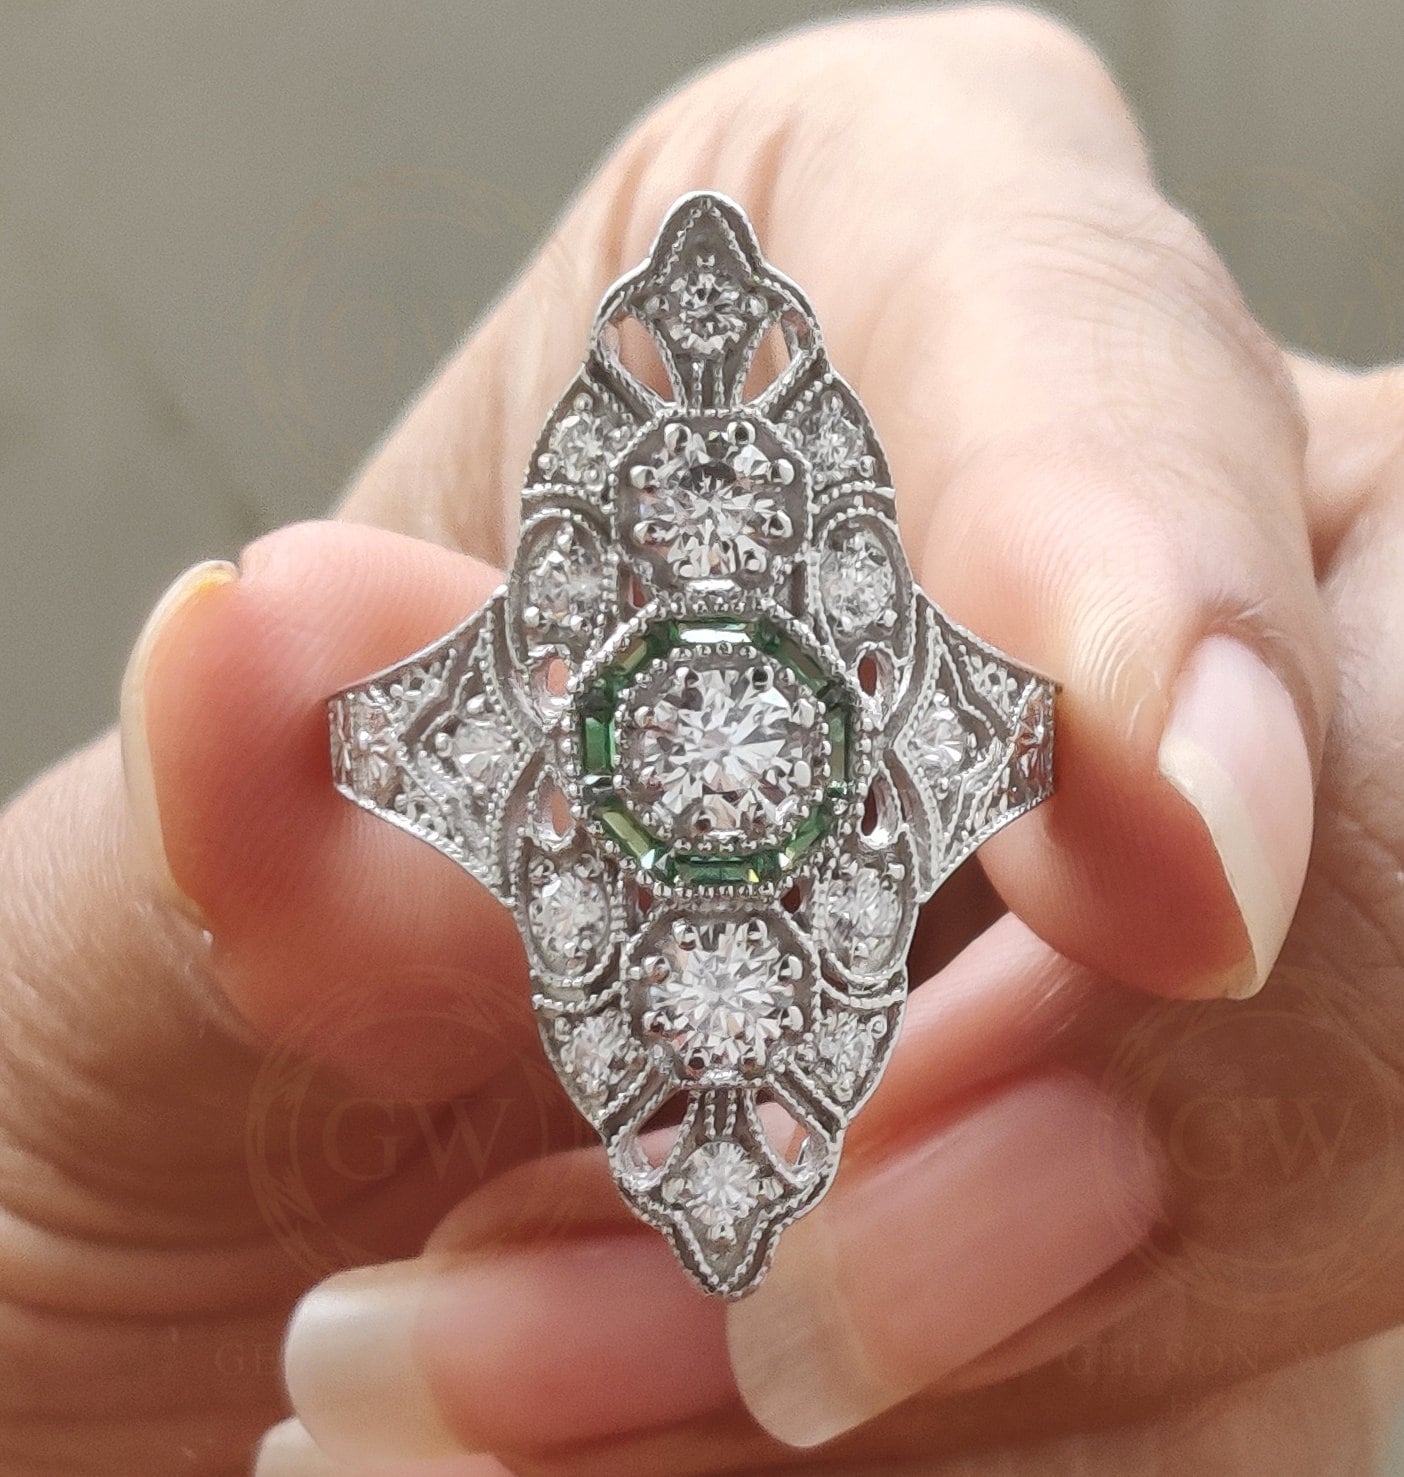 Art Deco Engagement Ring, Vintage Women Ring, Sterling Silver, Rings For Women, Gift For Her